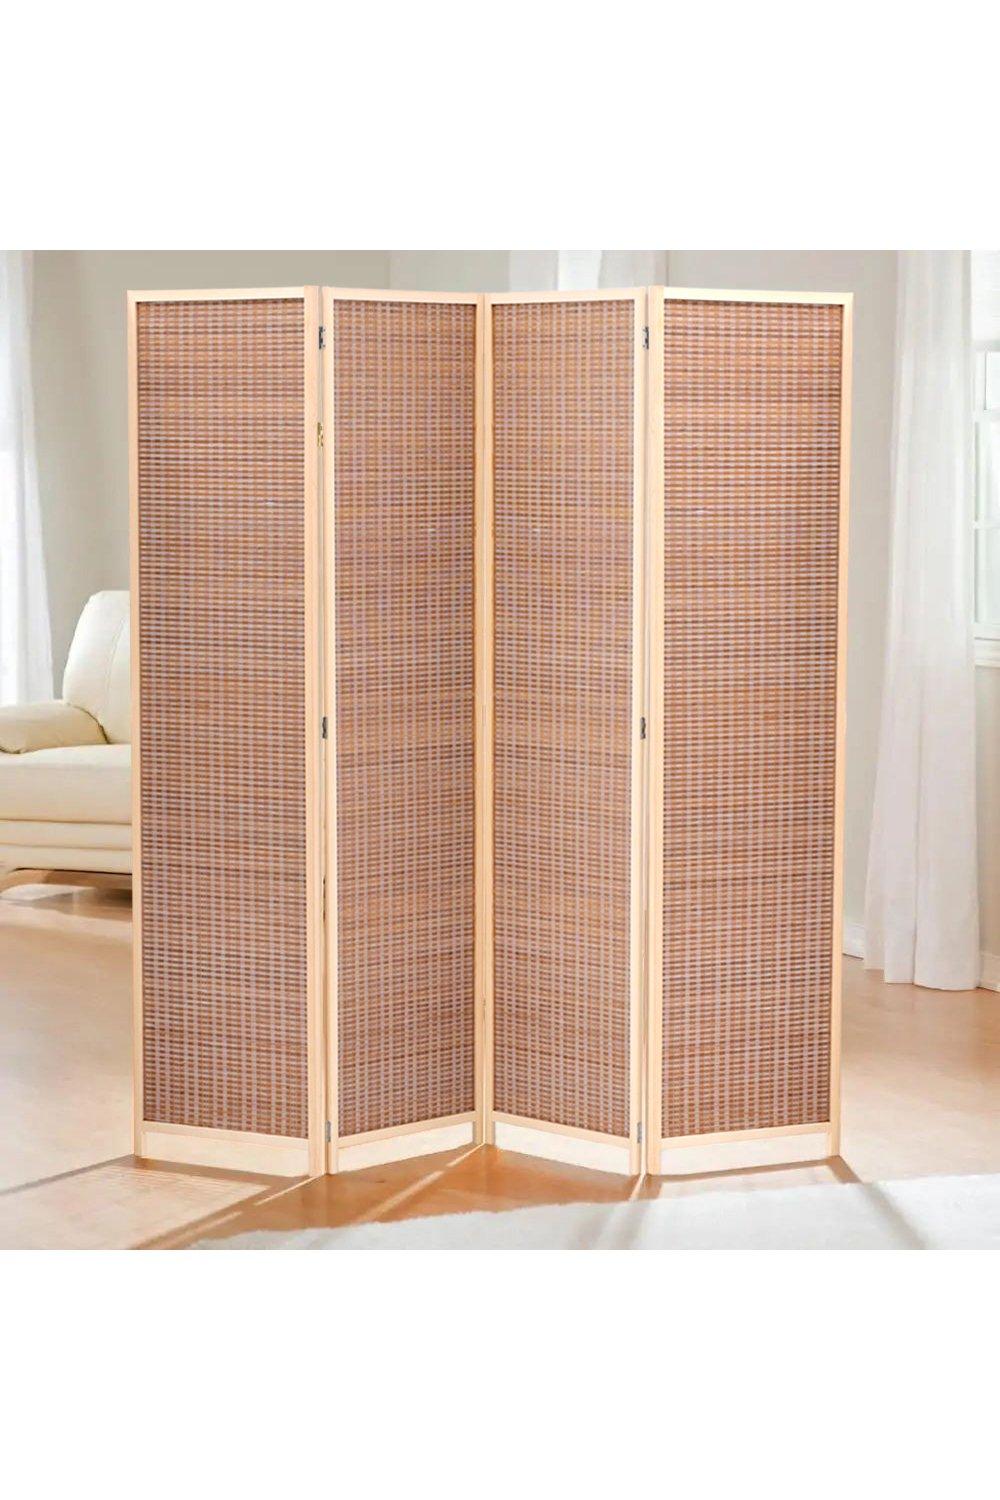 4-Panel Bamboo Woven Folding Room Divider